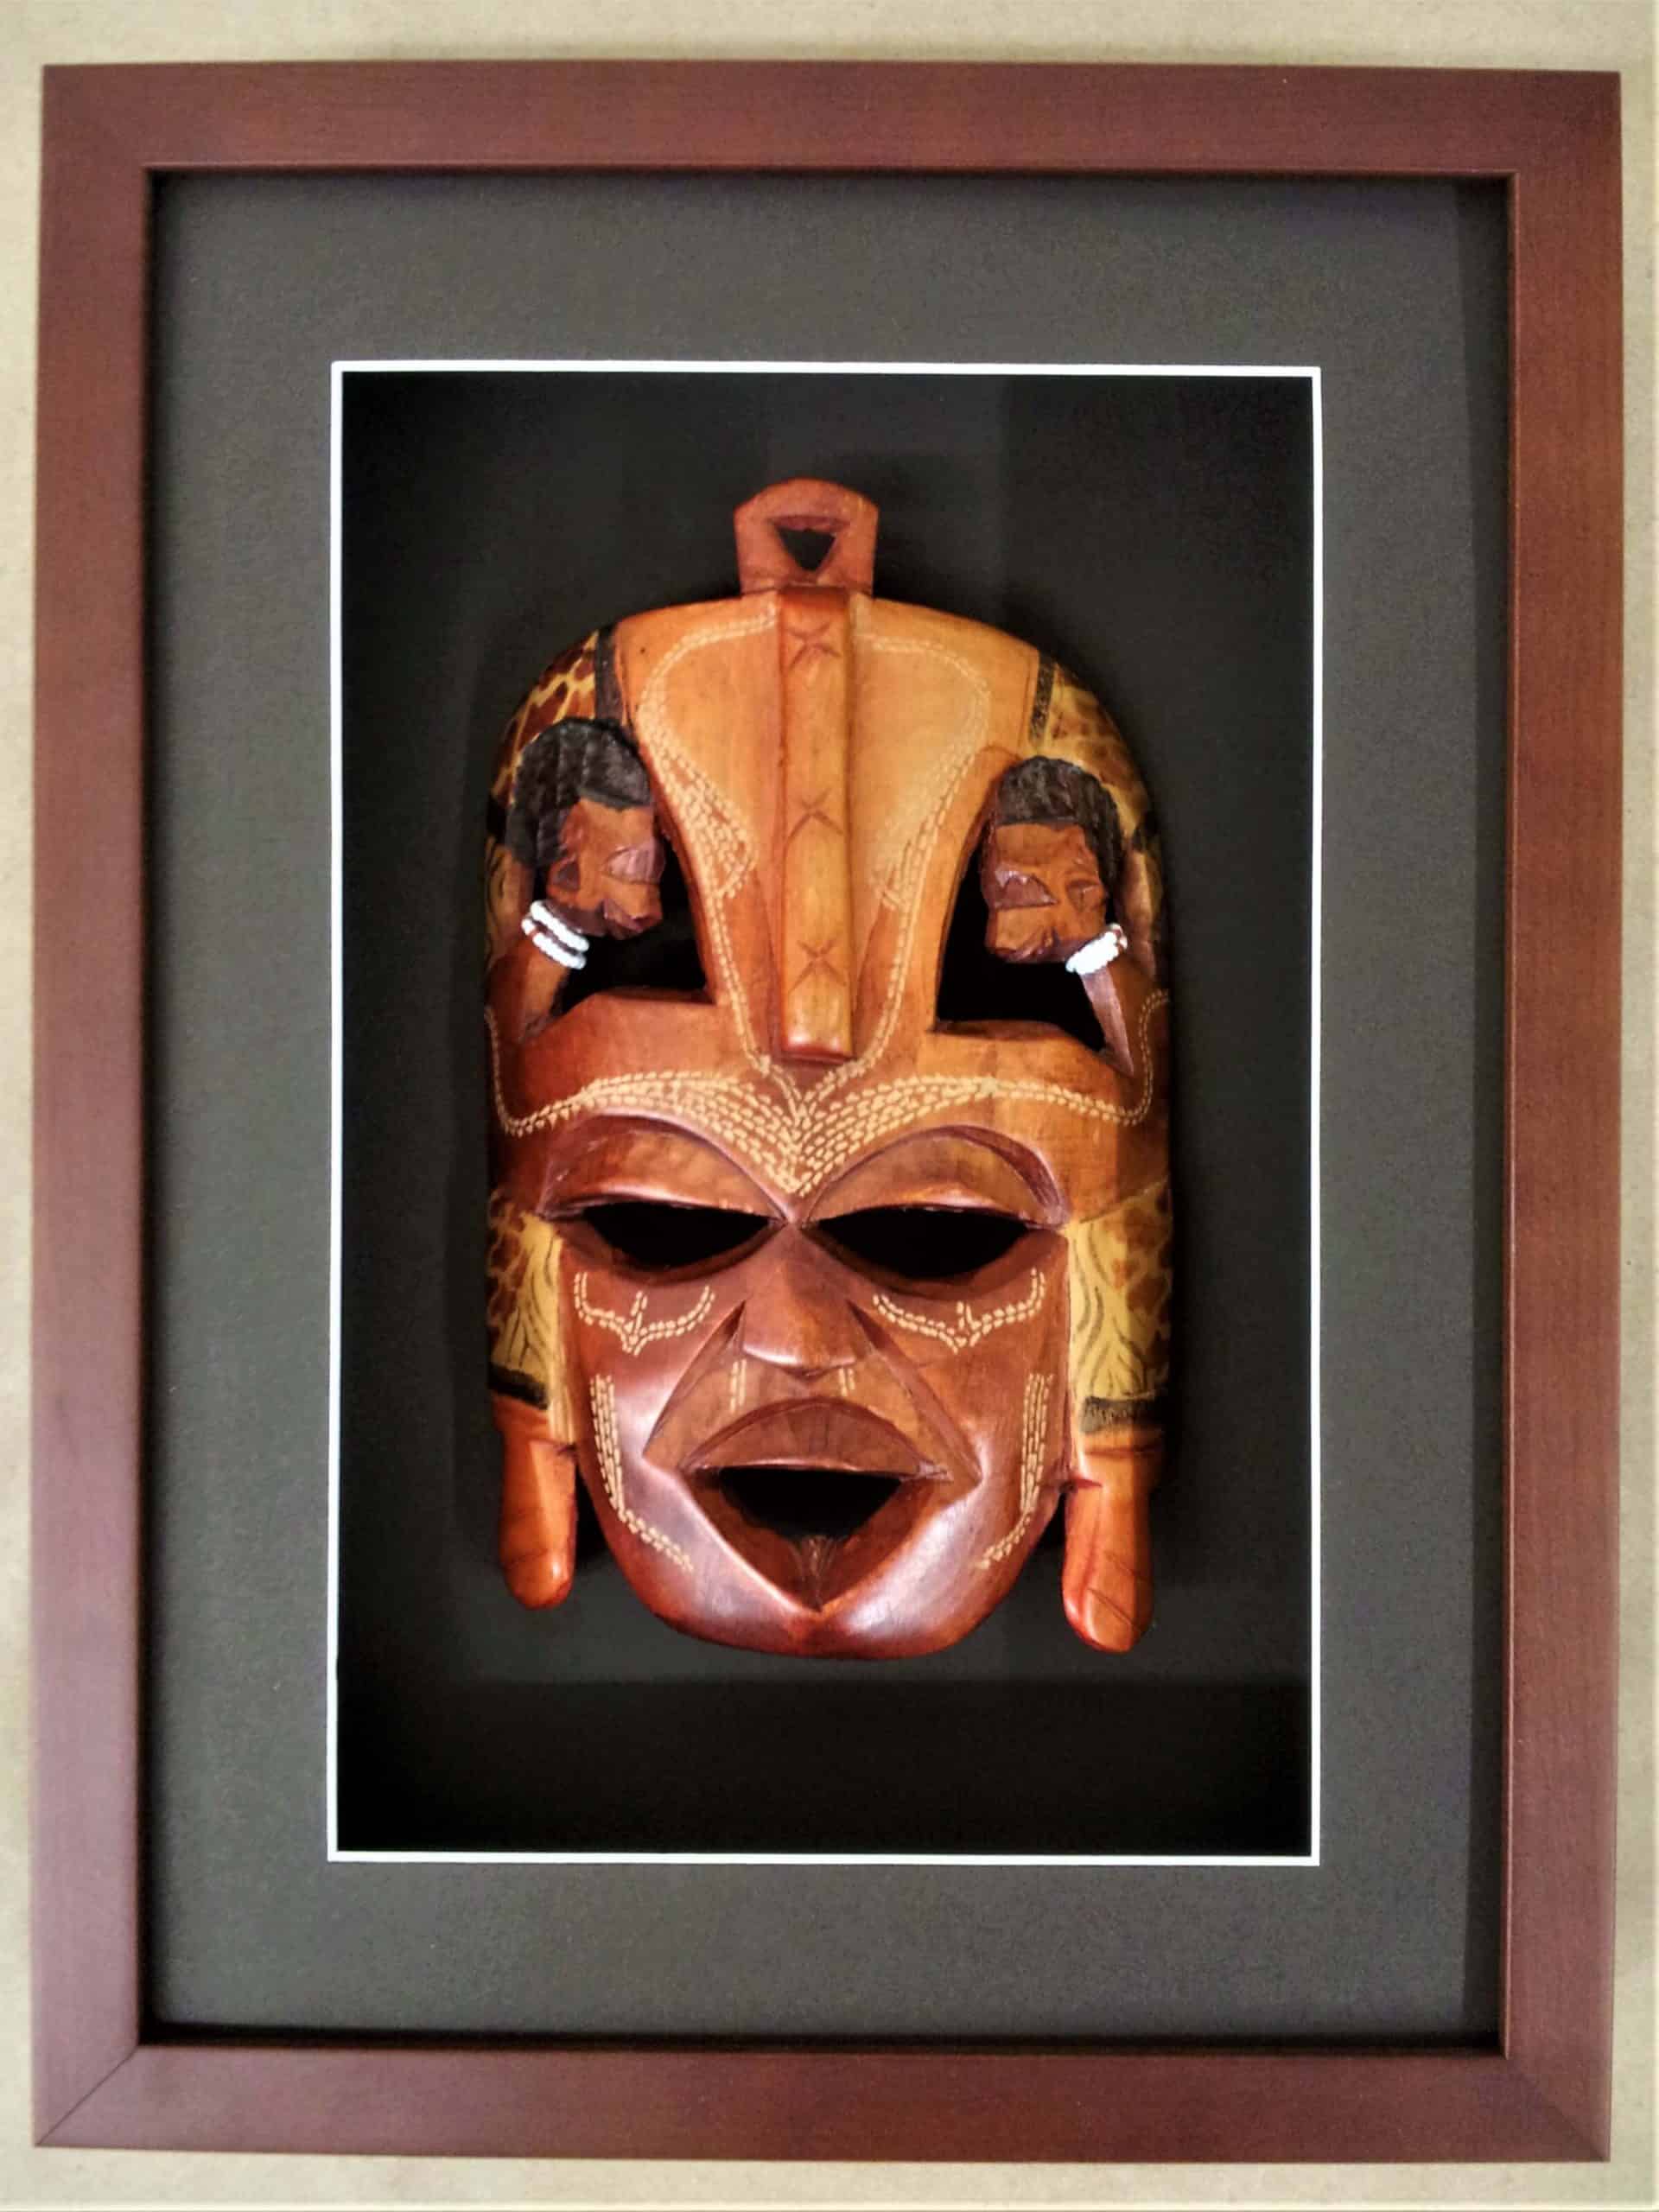 A wooden mask is framed in a wooden frame.